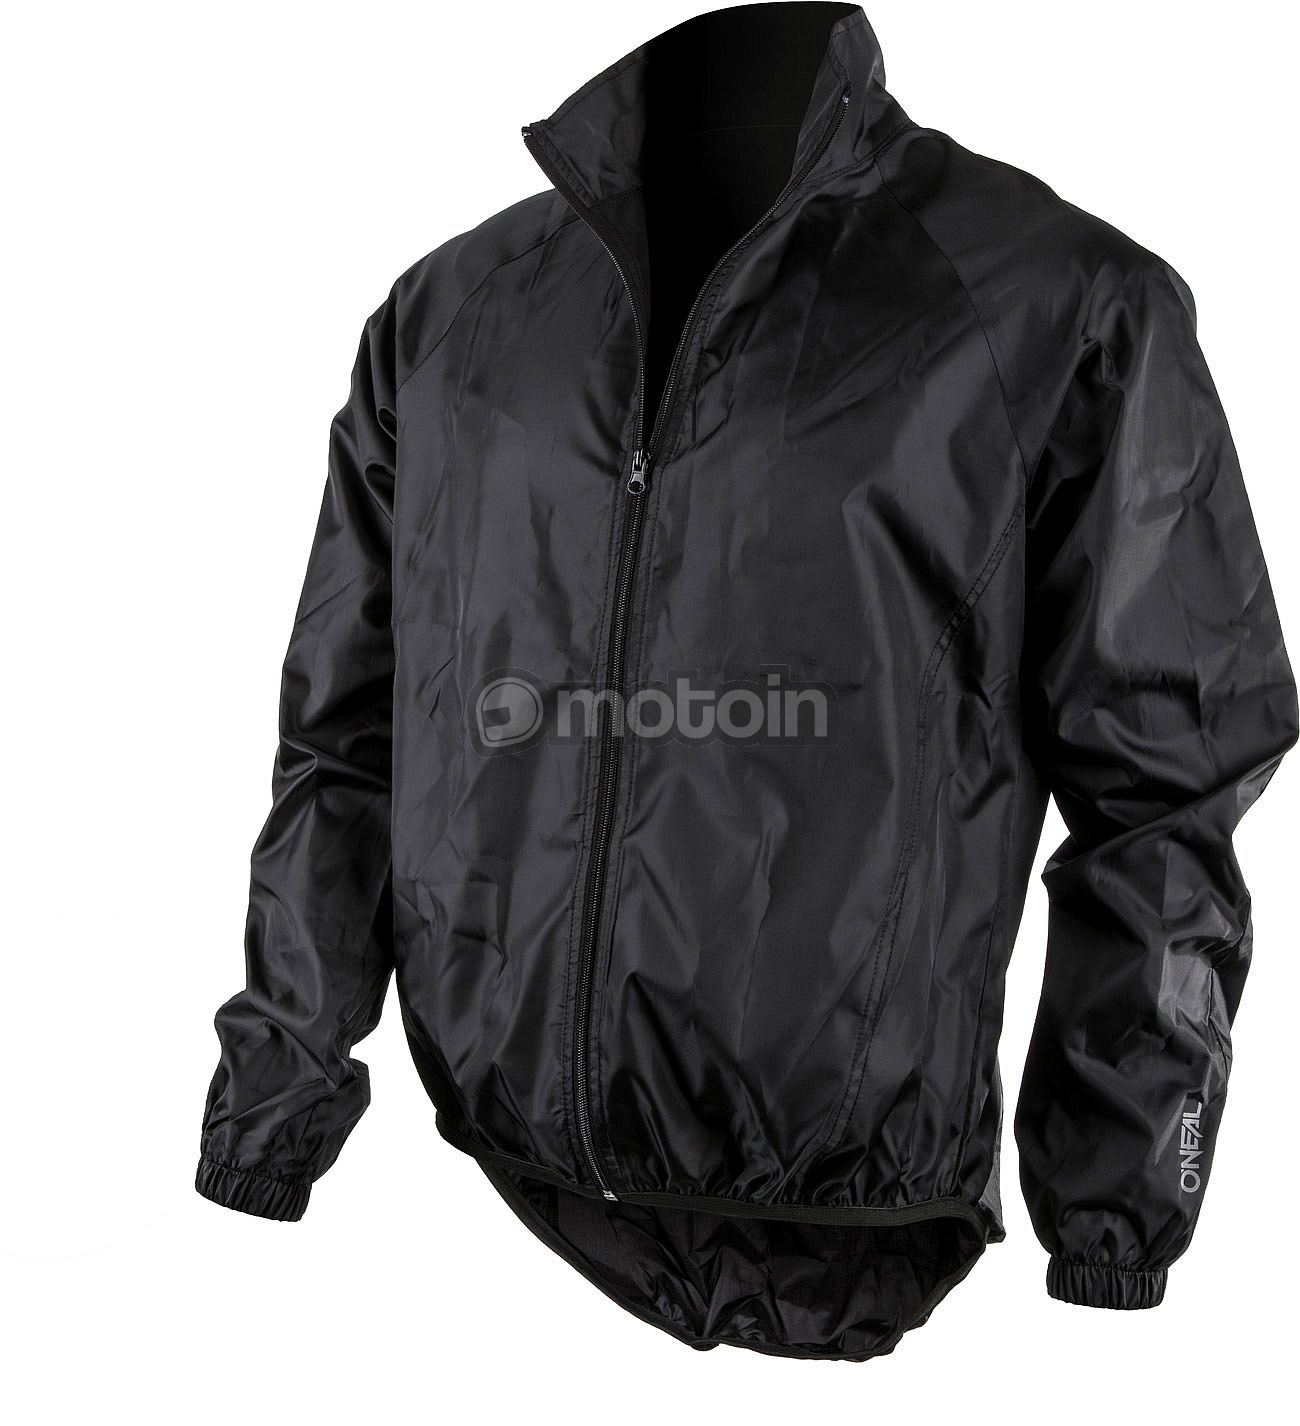 ONeal Breeze S17, rain jacket